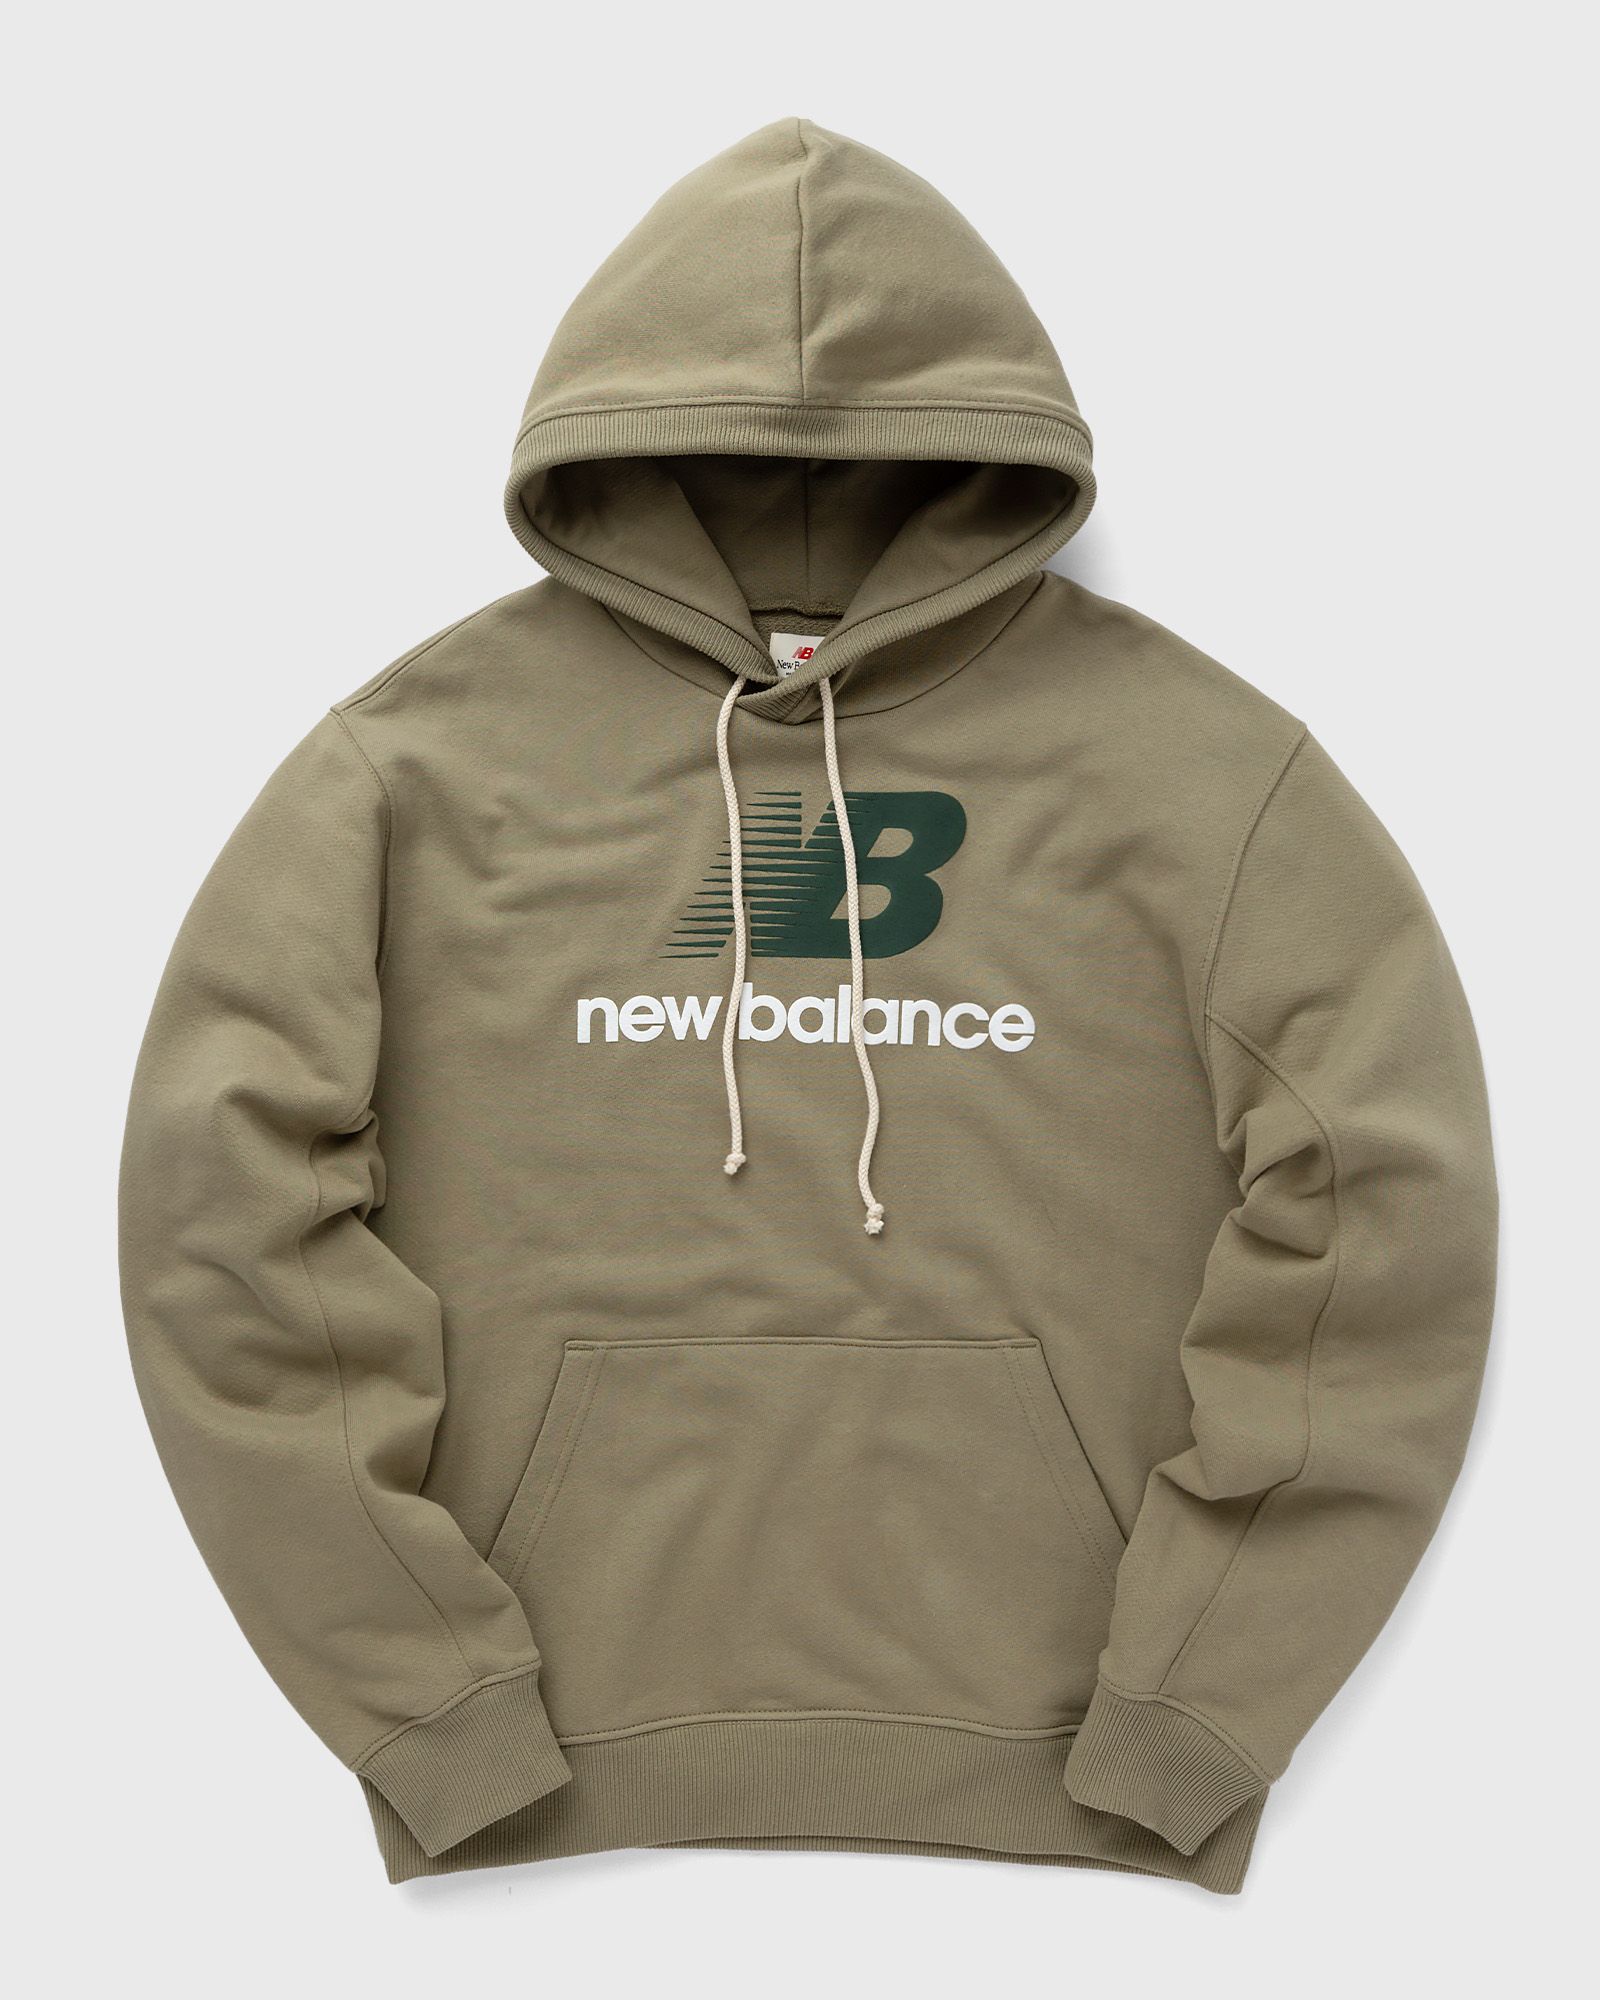 New Balance - made in usa heritage hoodie men hoodies brown in größe:xxl